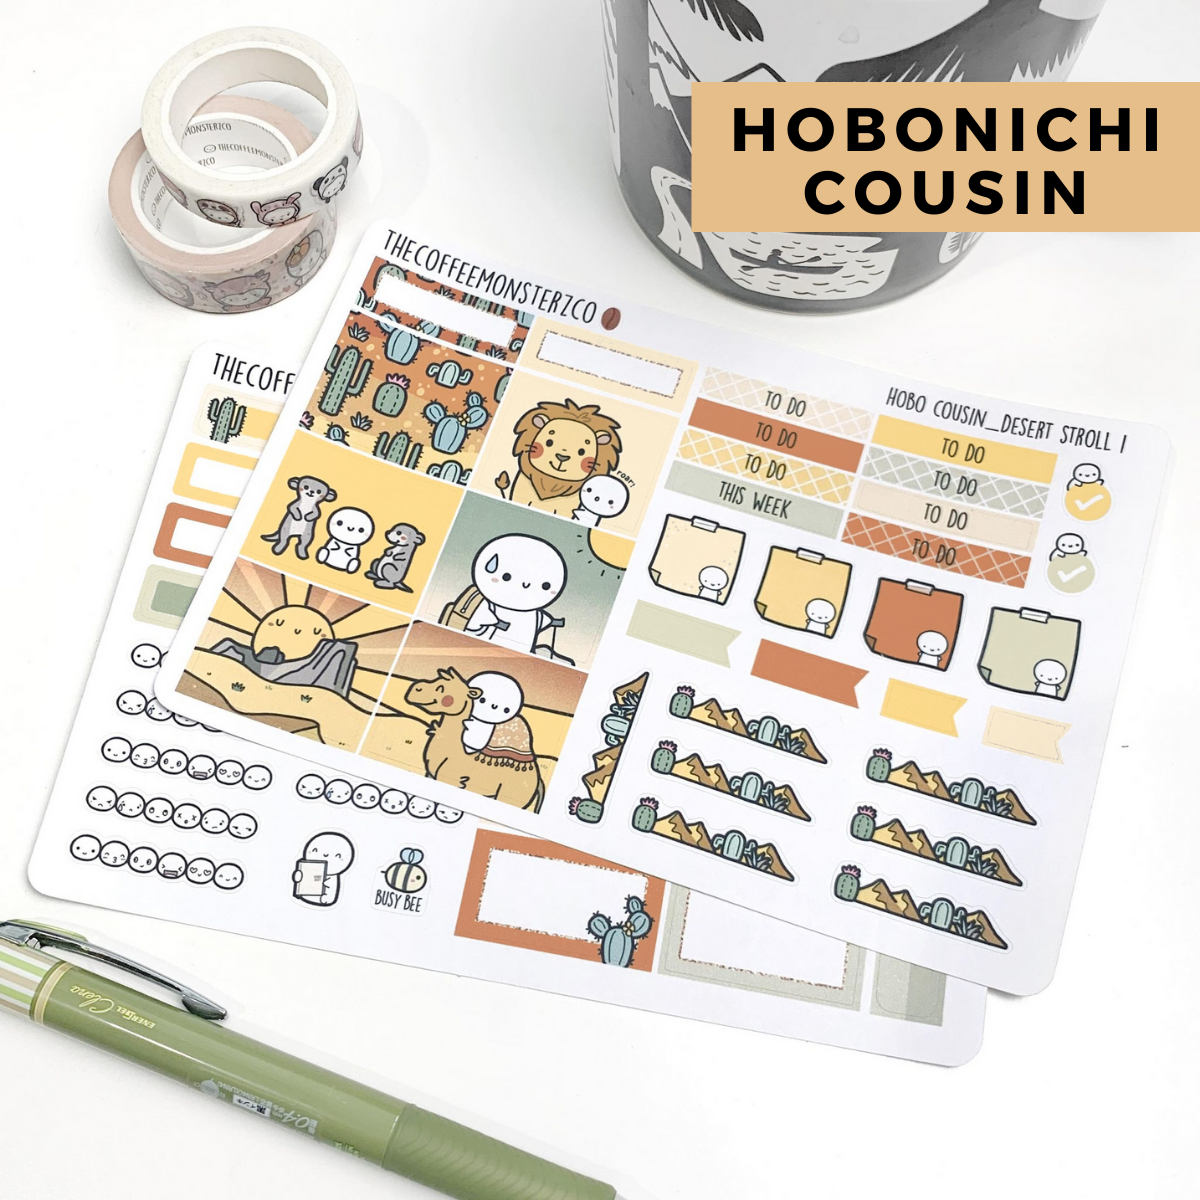 City Life Hobonichi Cousin Kit – TheCoffeeMonsterzCo